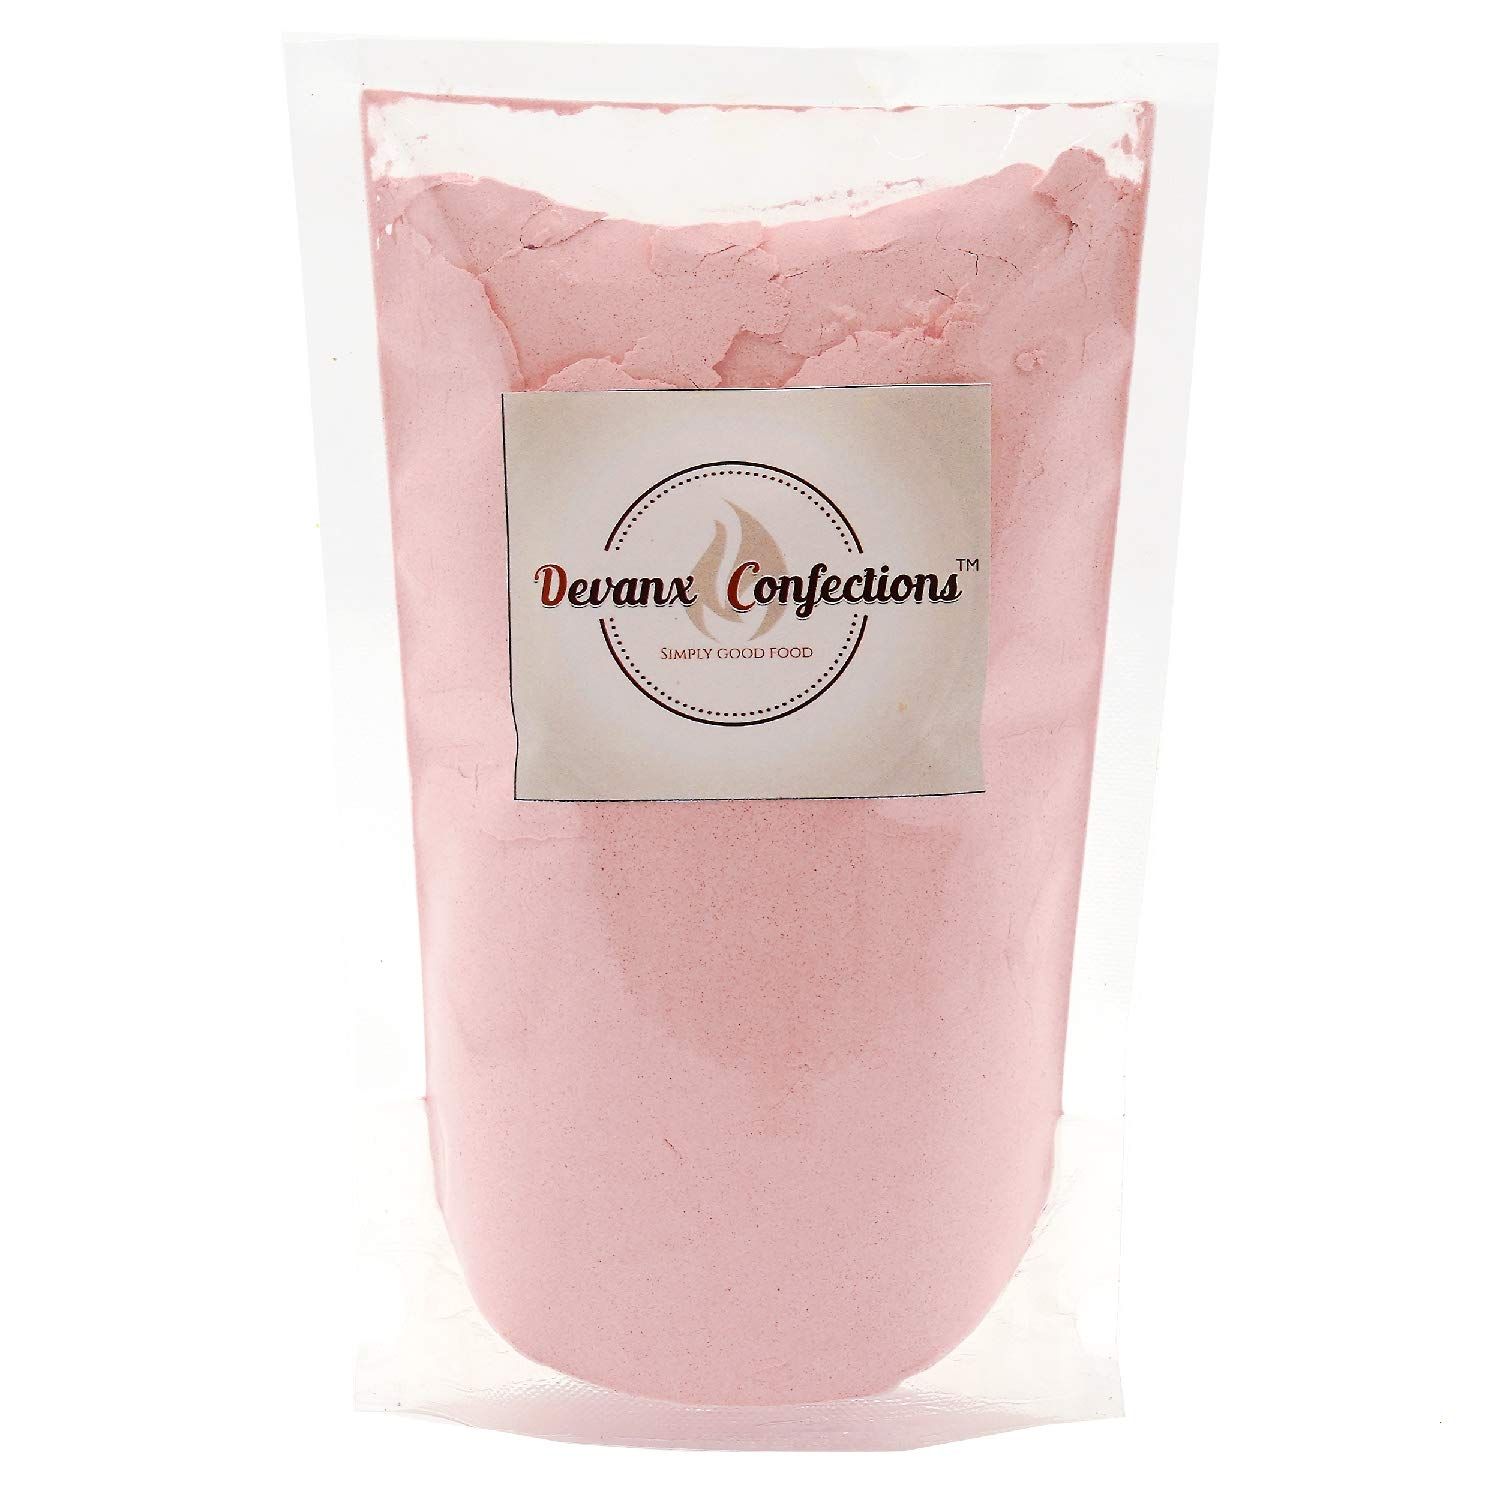 Devanx Confections Raspberry Custard Powder Image